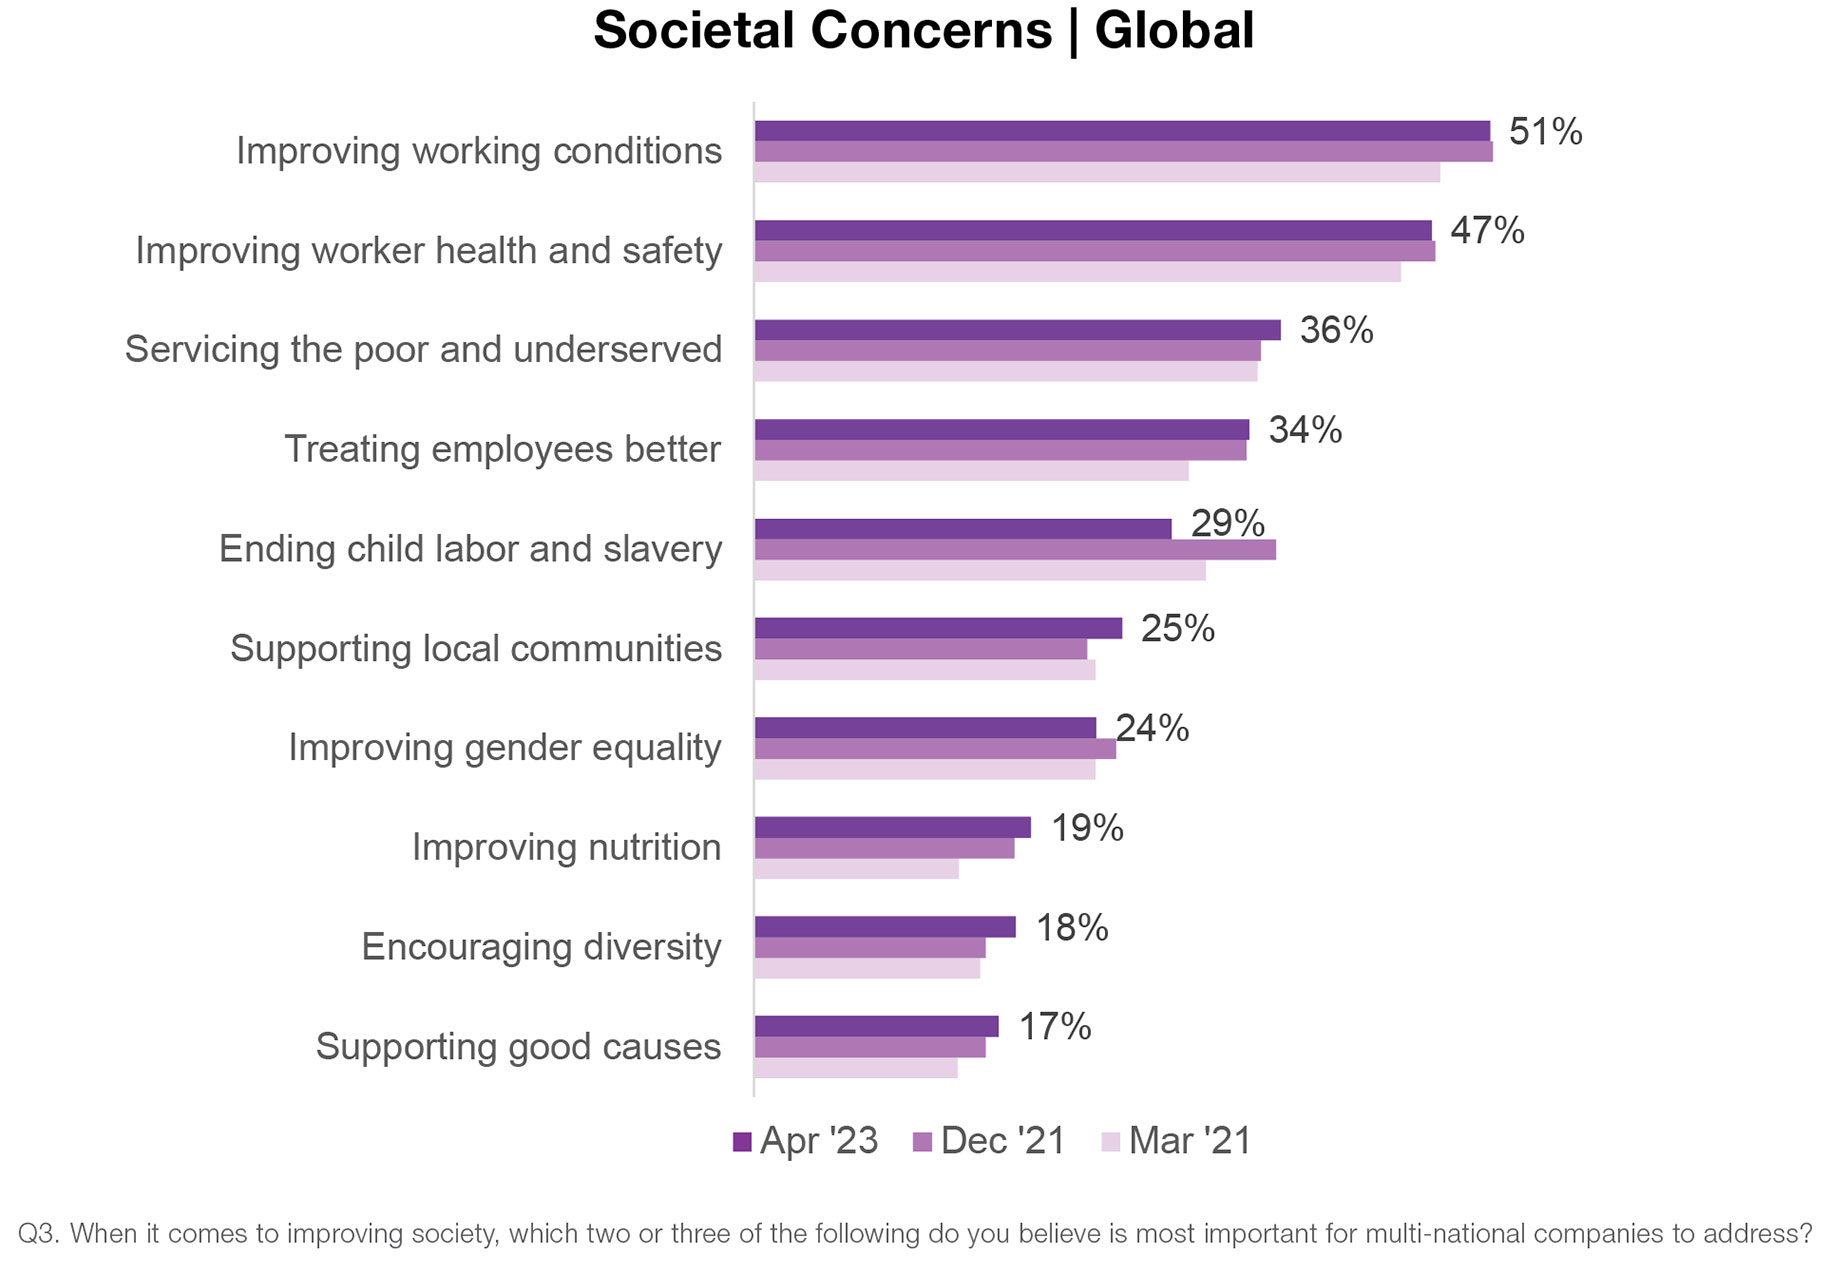 Societal concerns | Global